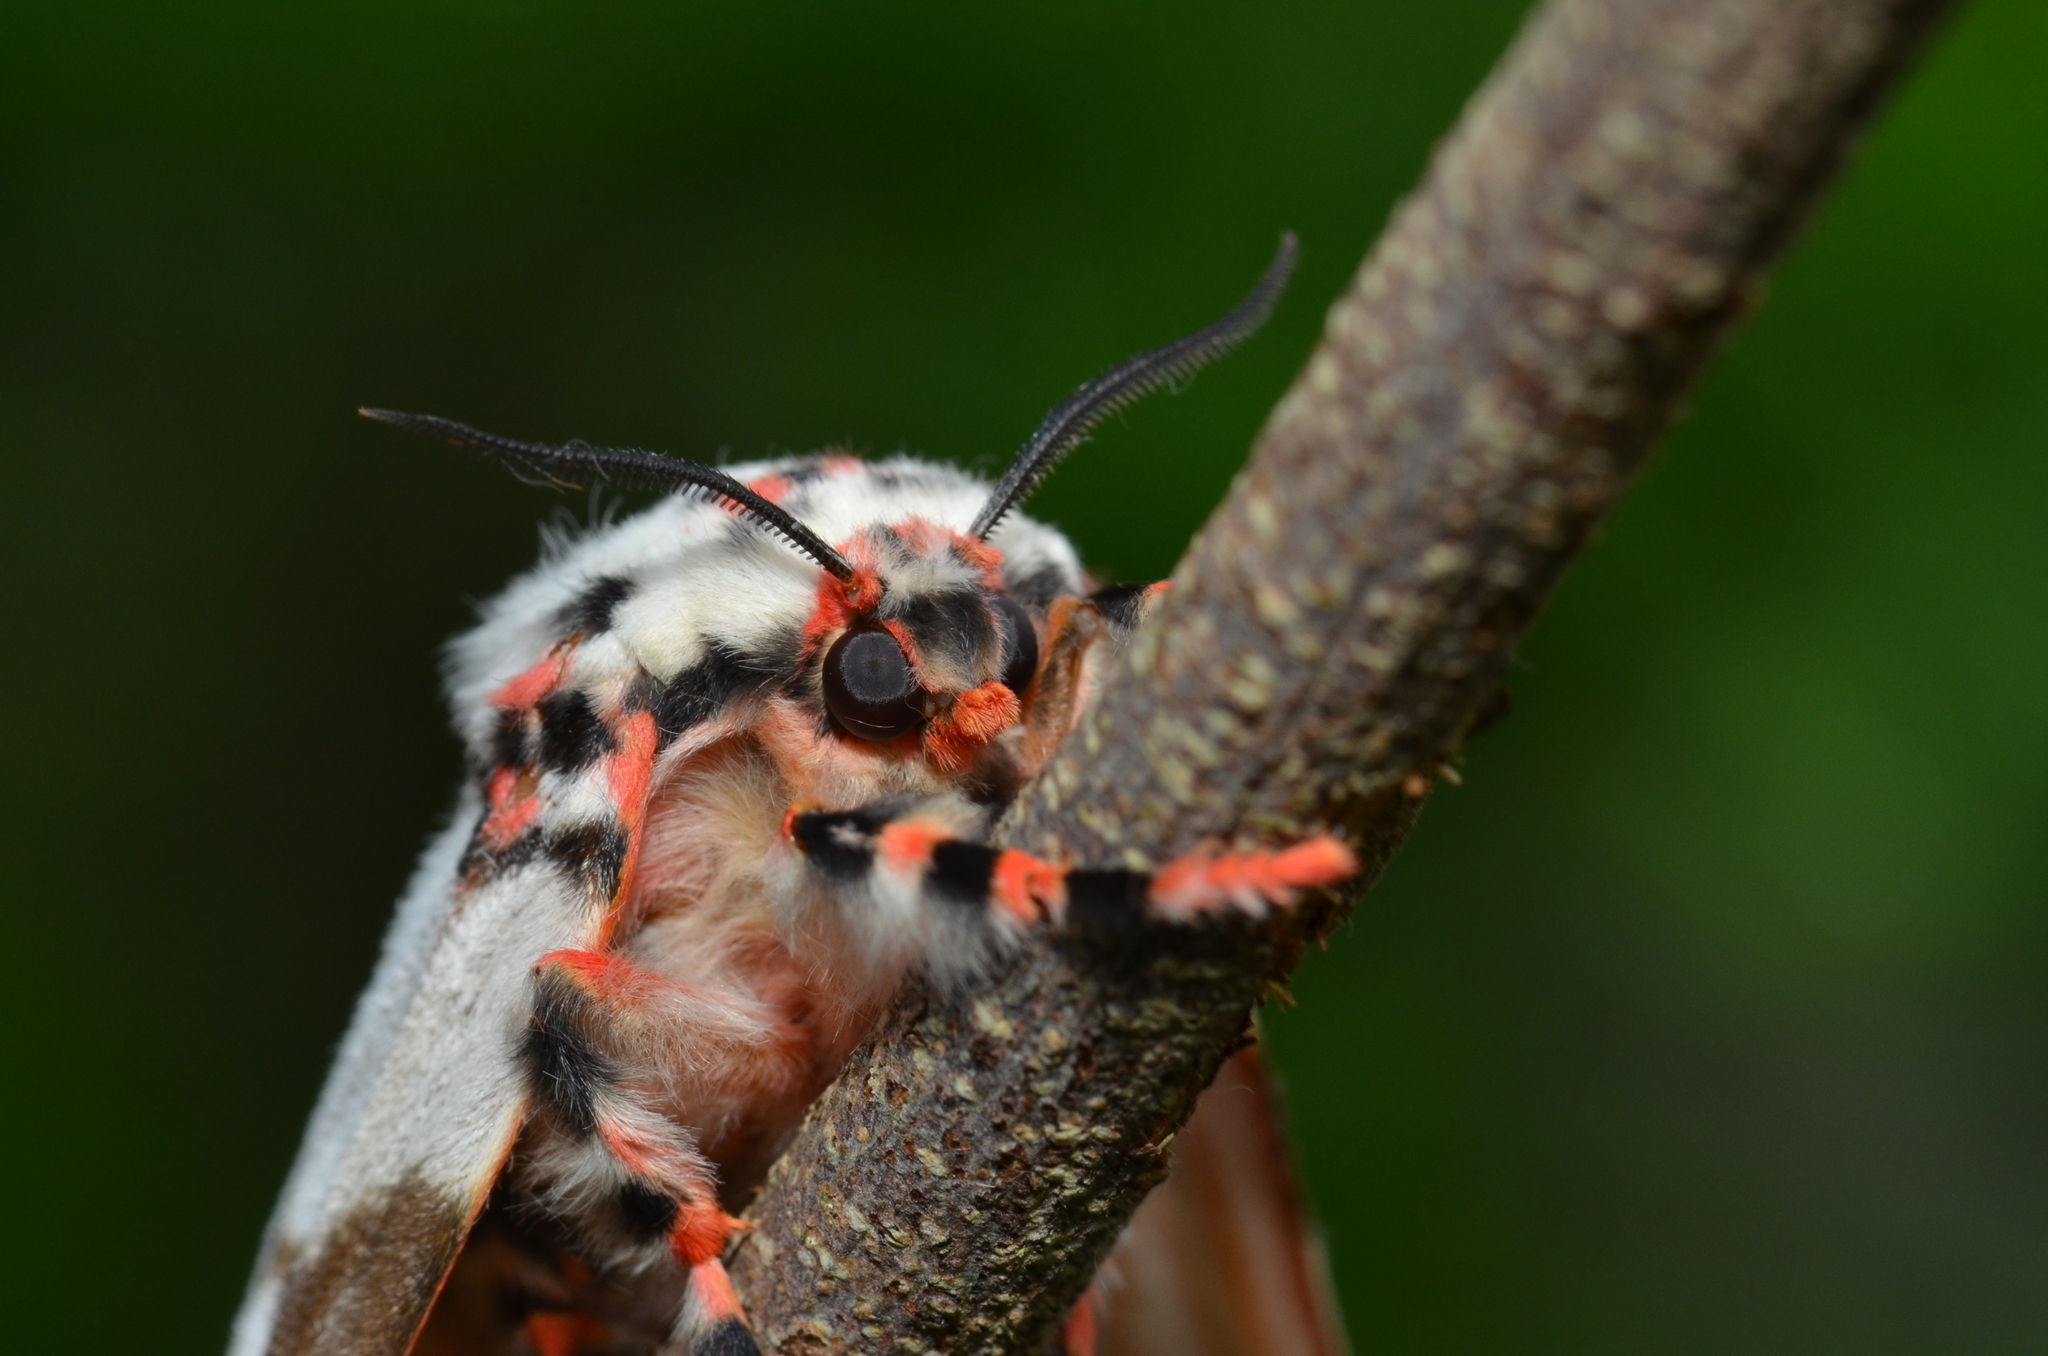 White Cedar Moth (Erebidae Moths of SW Australia) · iNaturalist